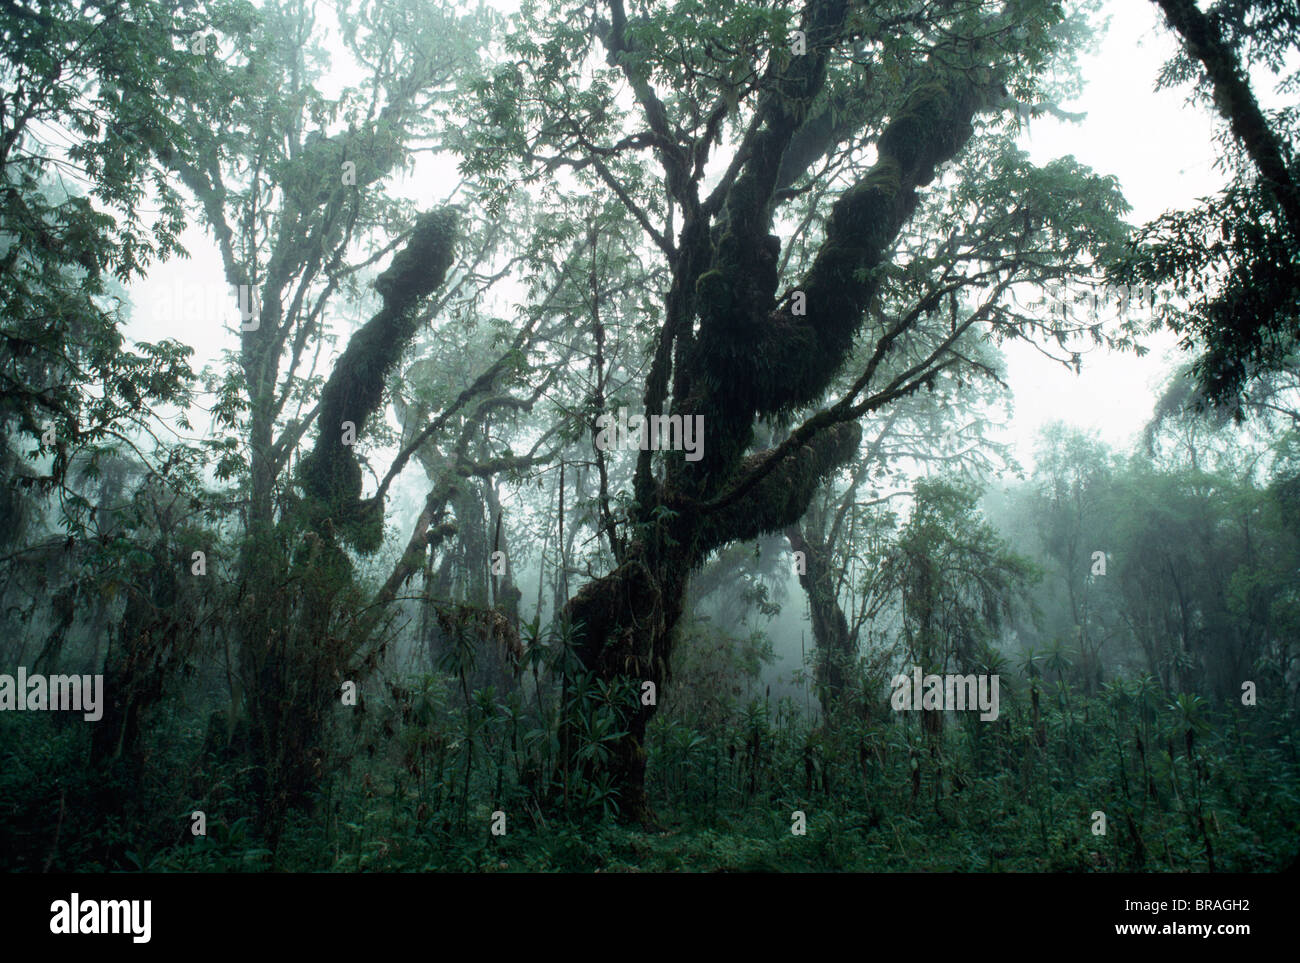 Hagenia (Hagenia abyssinica) Forest, Mountain Gorilla Habitat, Virunga Volcanoes, Rwanda, Africa Stock Photo